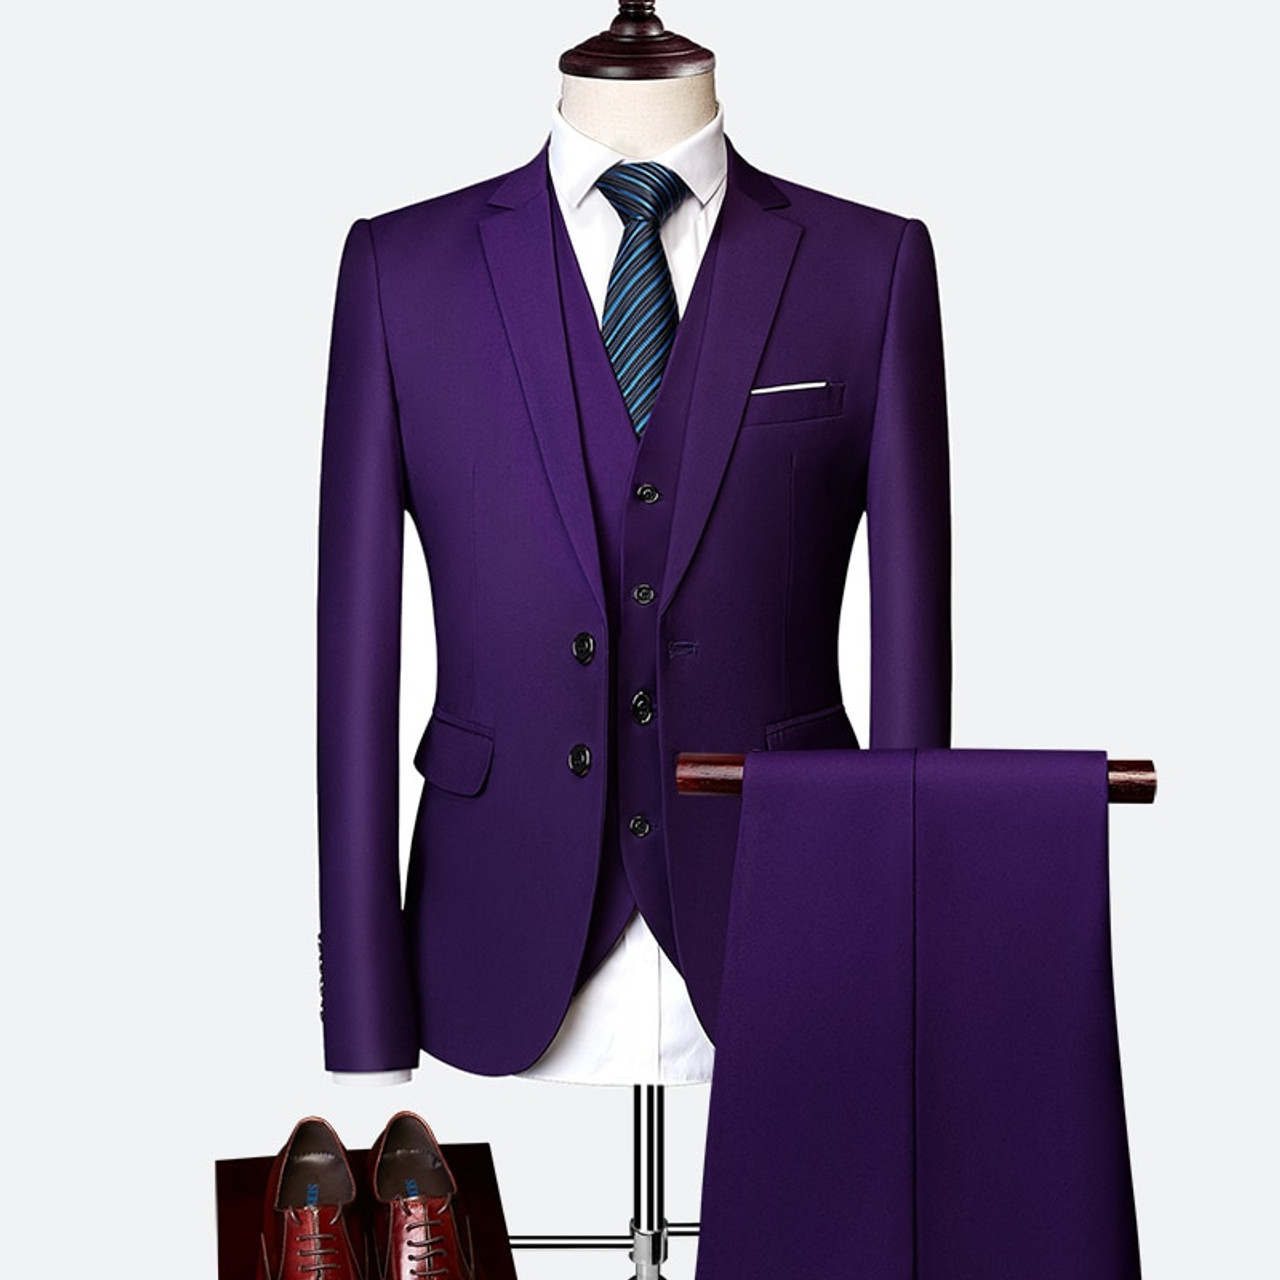 Plyesxale 3 Piece Wedding Suits For Men Slim Fit Men s Suits Formal Burgundy Green Purple 39779.1549629655